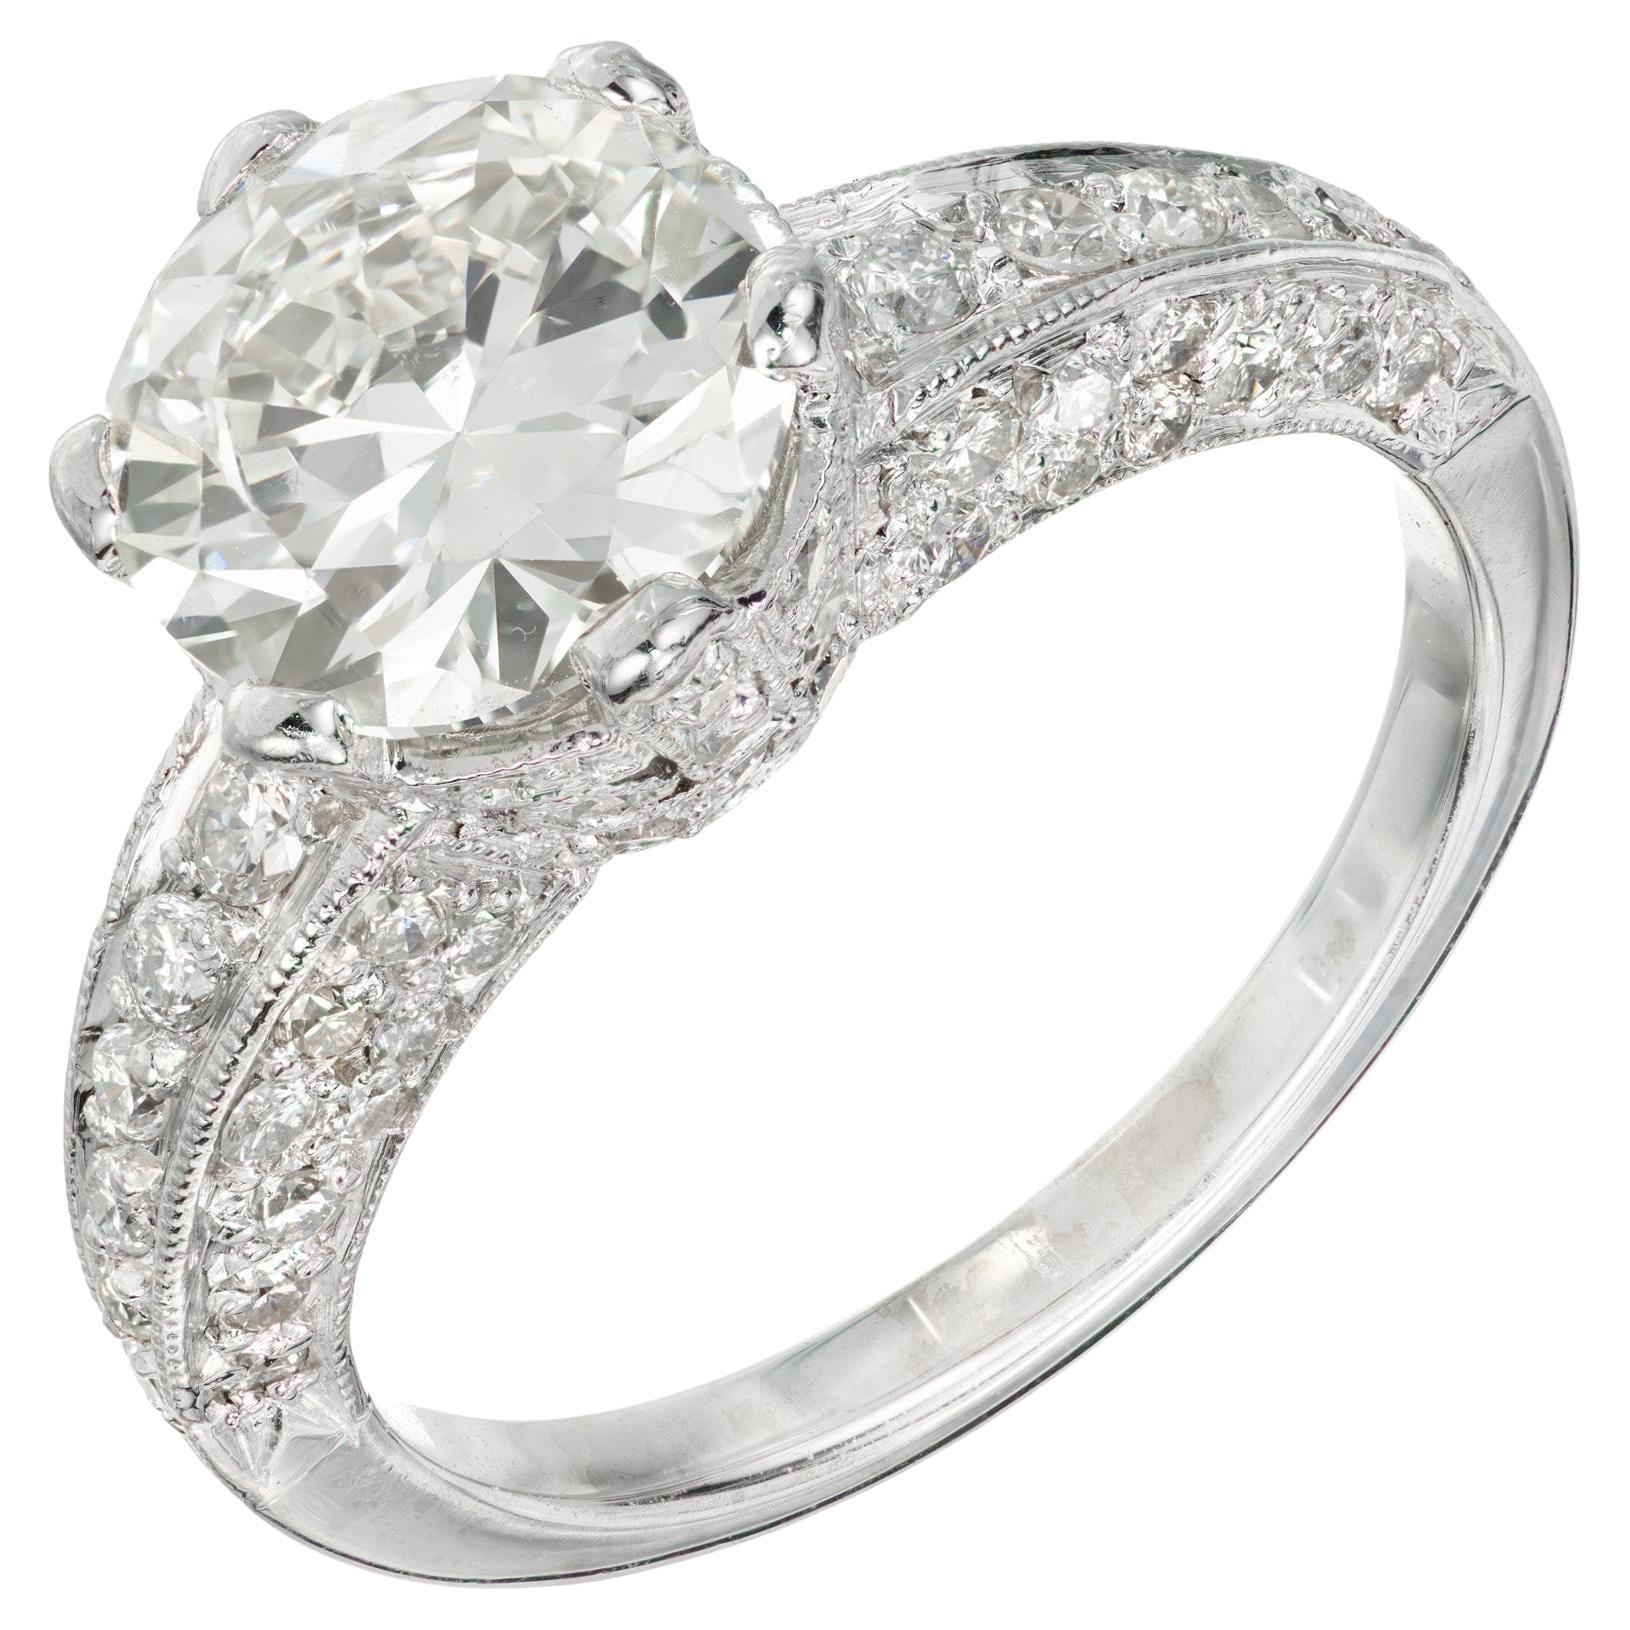 1.77 Carat Transitional Cut Diamond Platinum Engagement Ring